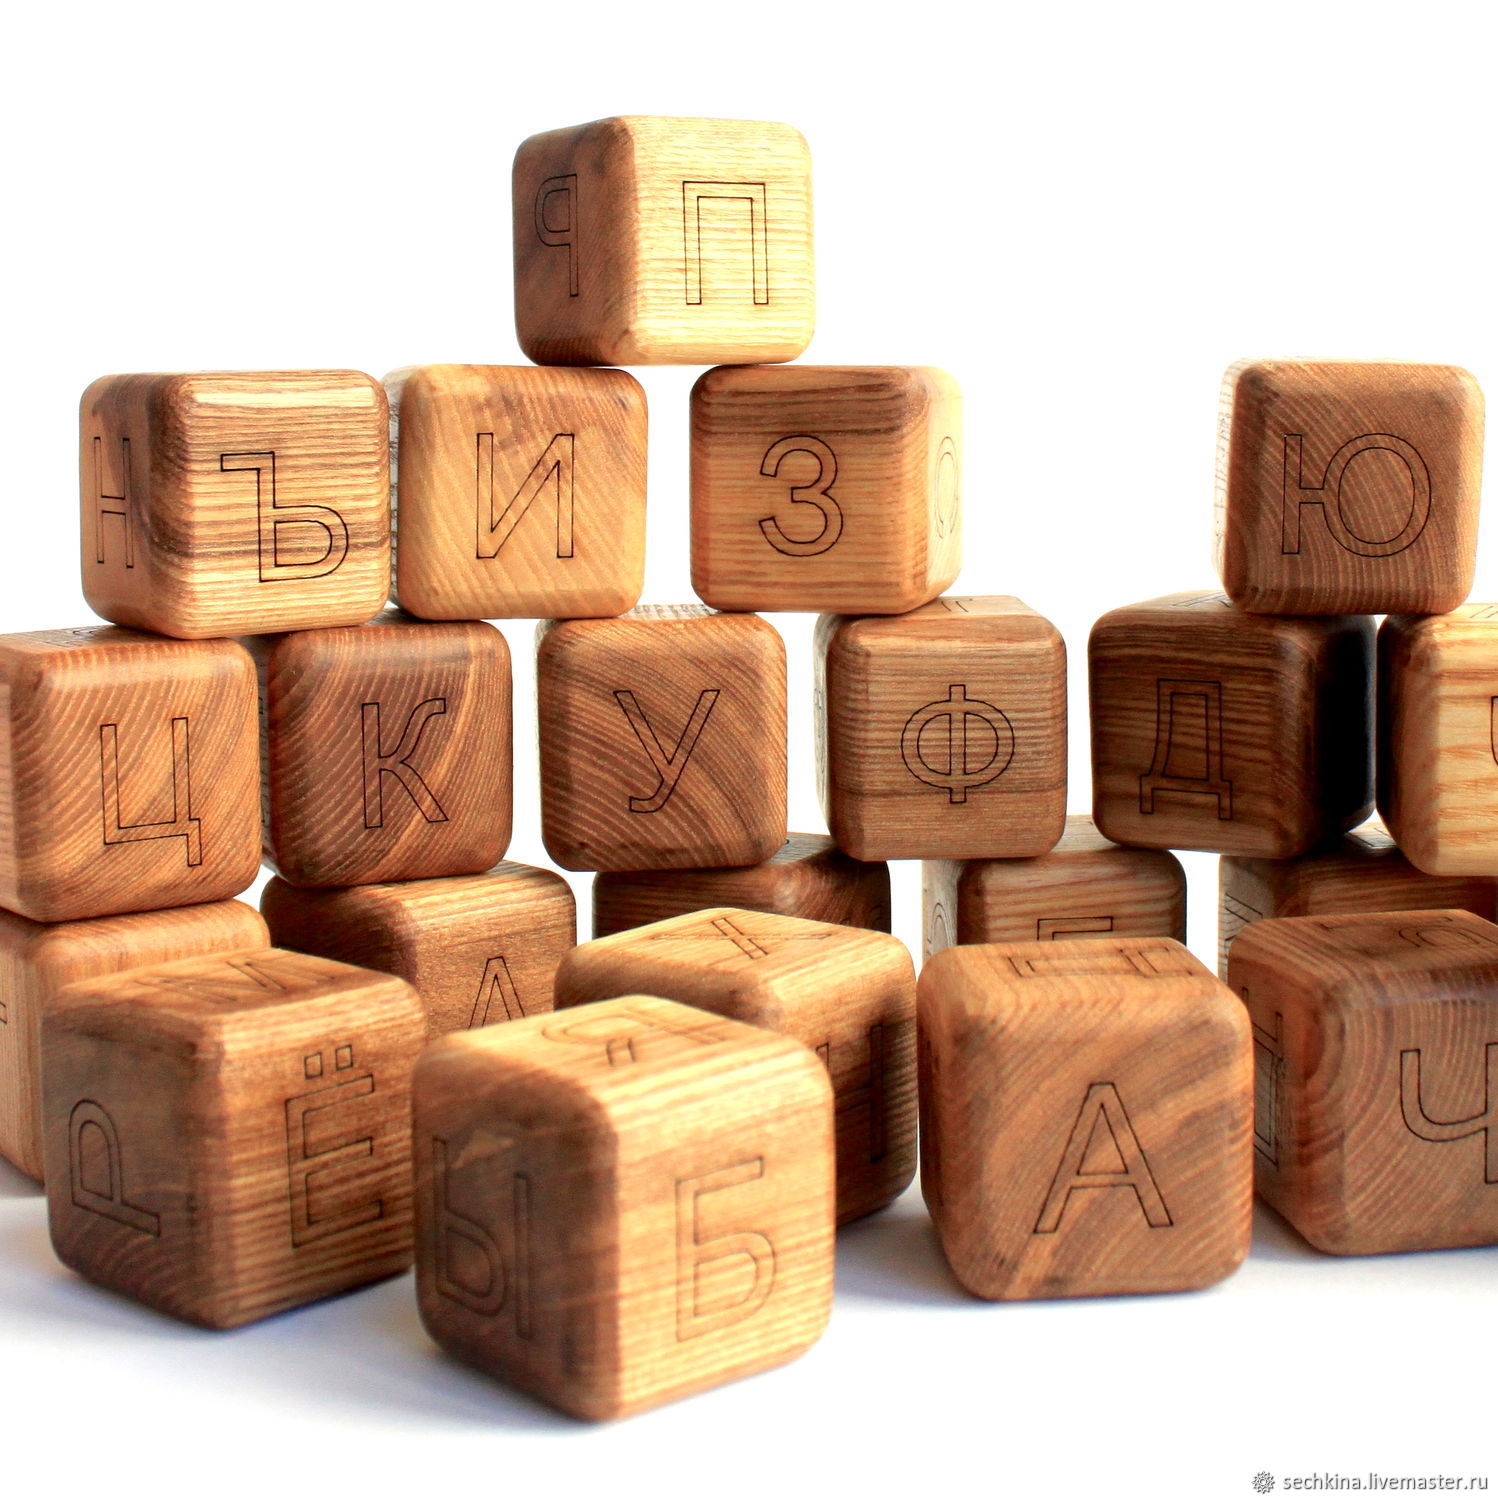 Кубики. Деревянные кубики с буквами. Детские кубики деревянные. Детские кубики деревянные с буквами. Большие деревянные кубики.